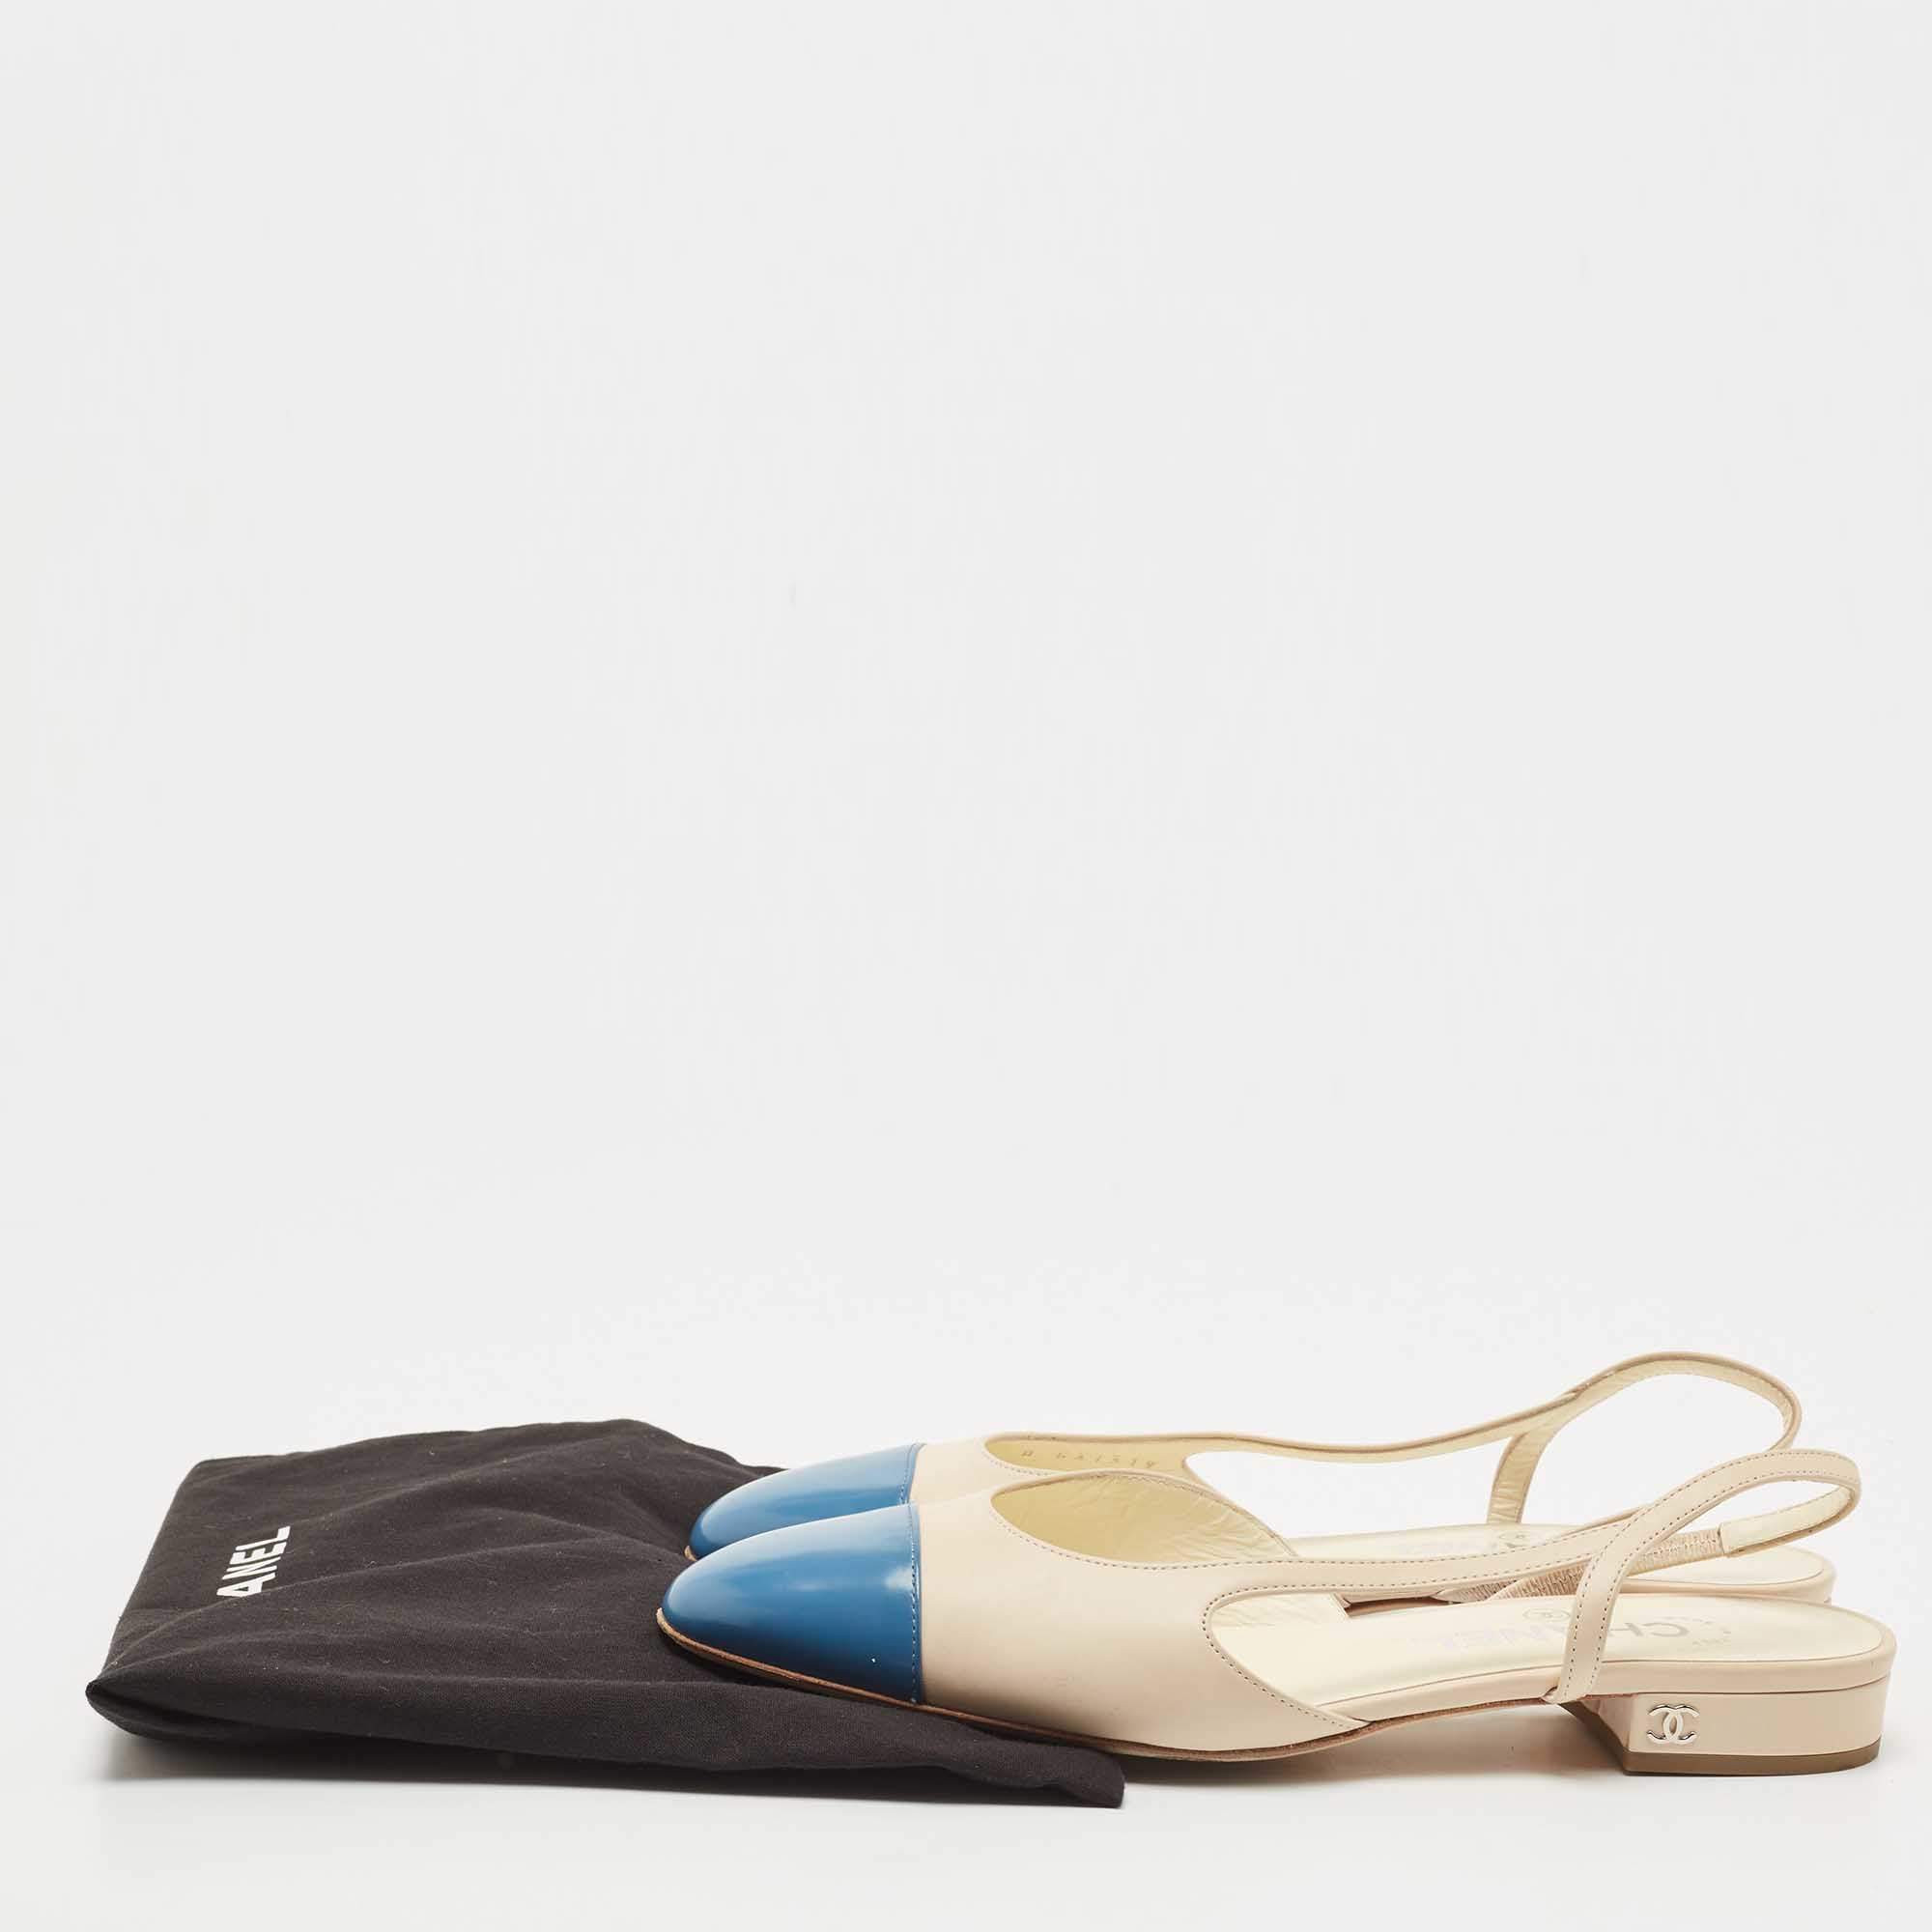 Chanel Blue/Cream Leather Cap Toe CC Slingback Flat Sandals